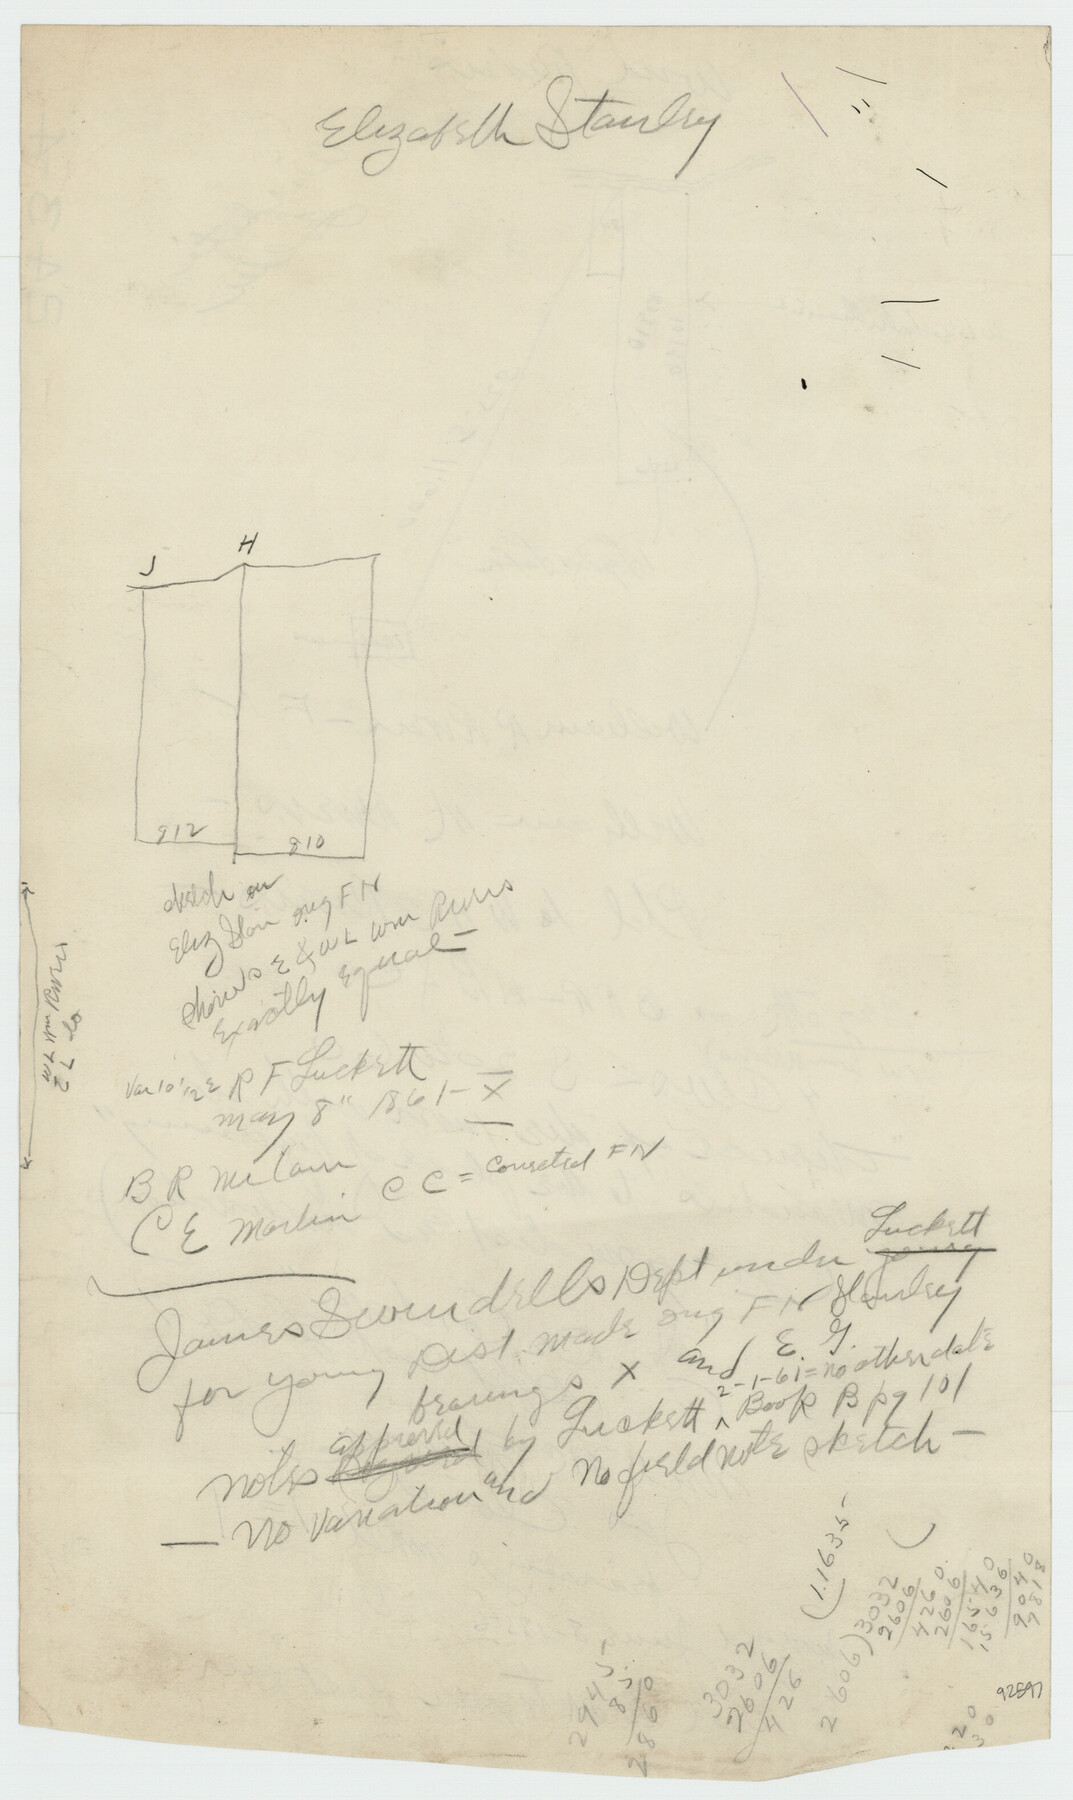 91969, [Pencil sketch of Wm. Rivers survey], Twichell Survey Records